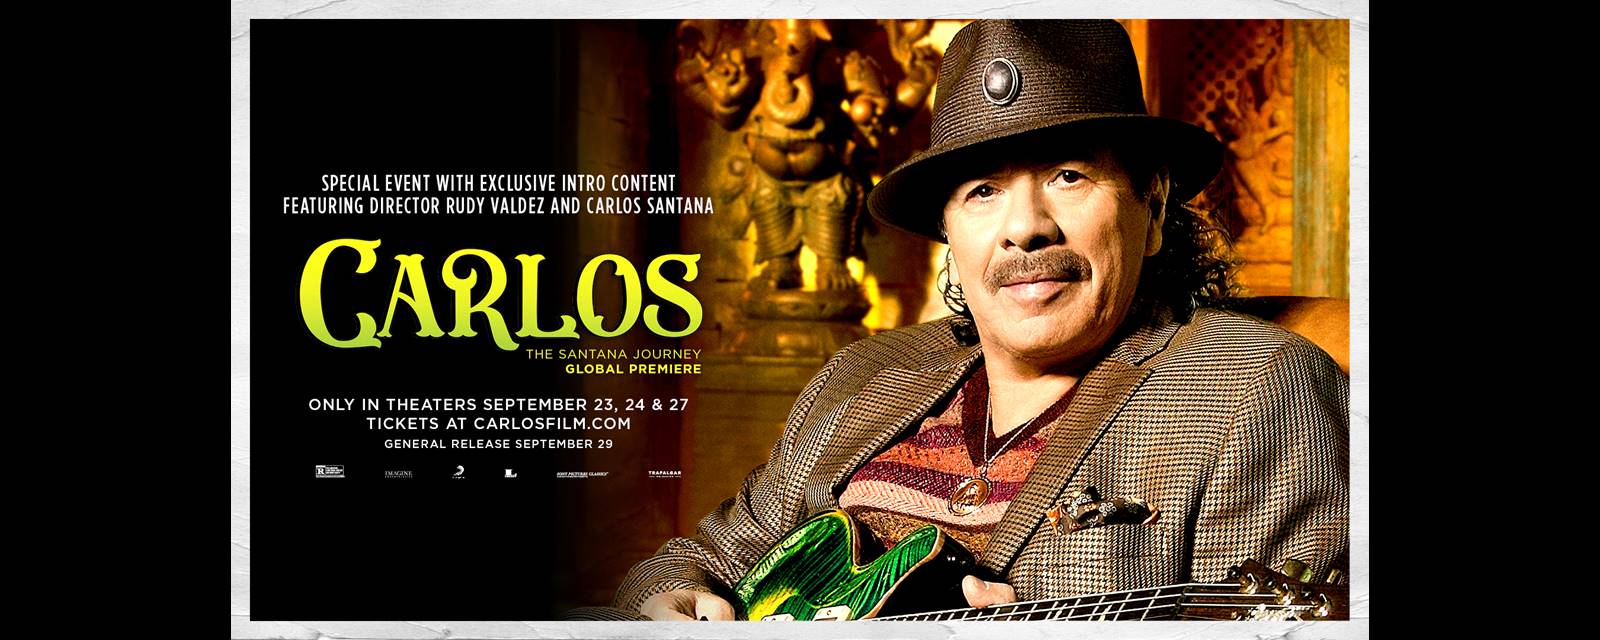 Carlos: The Santana Journey Global Premiere